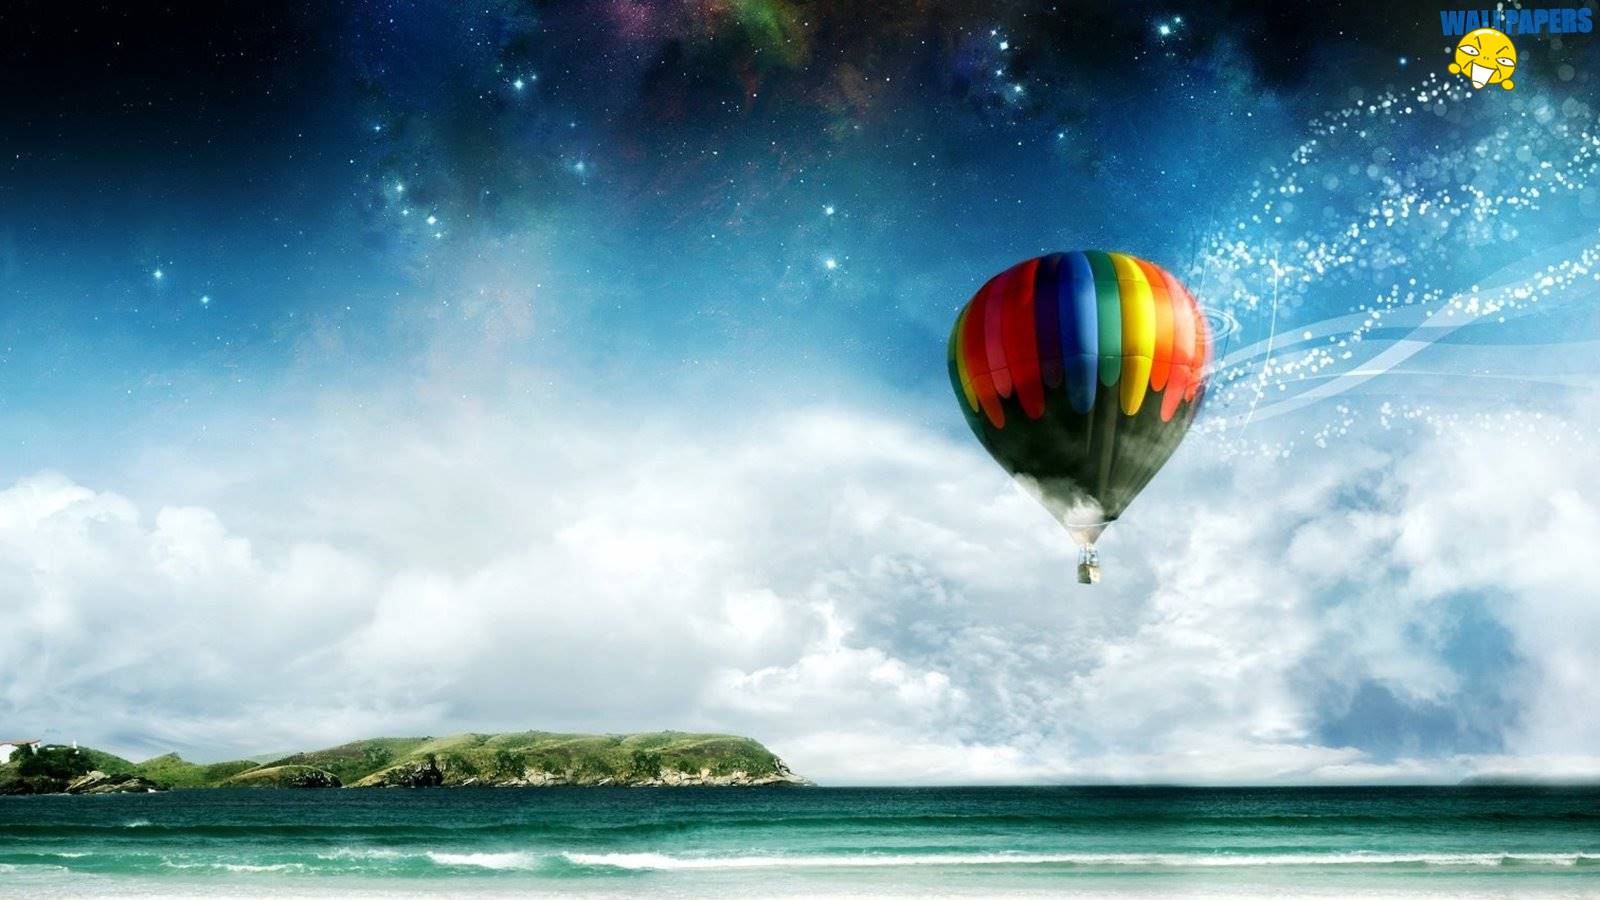 air balloon wallpaper,hot air ballooning,hot air balloon,sky,nature,atmosphere